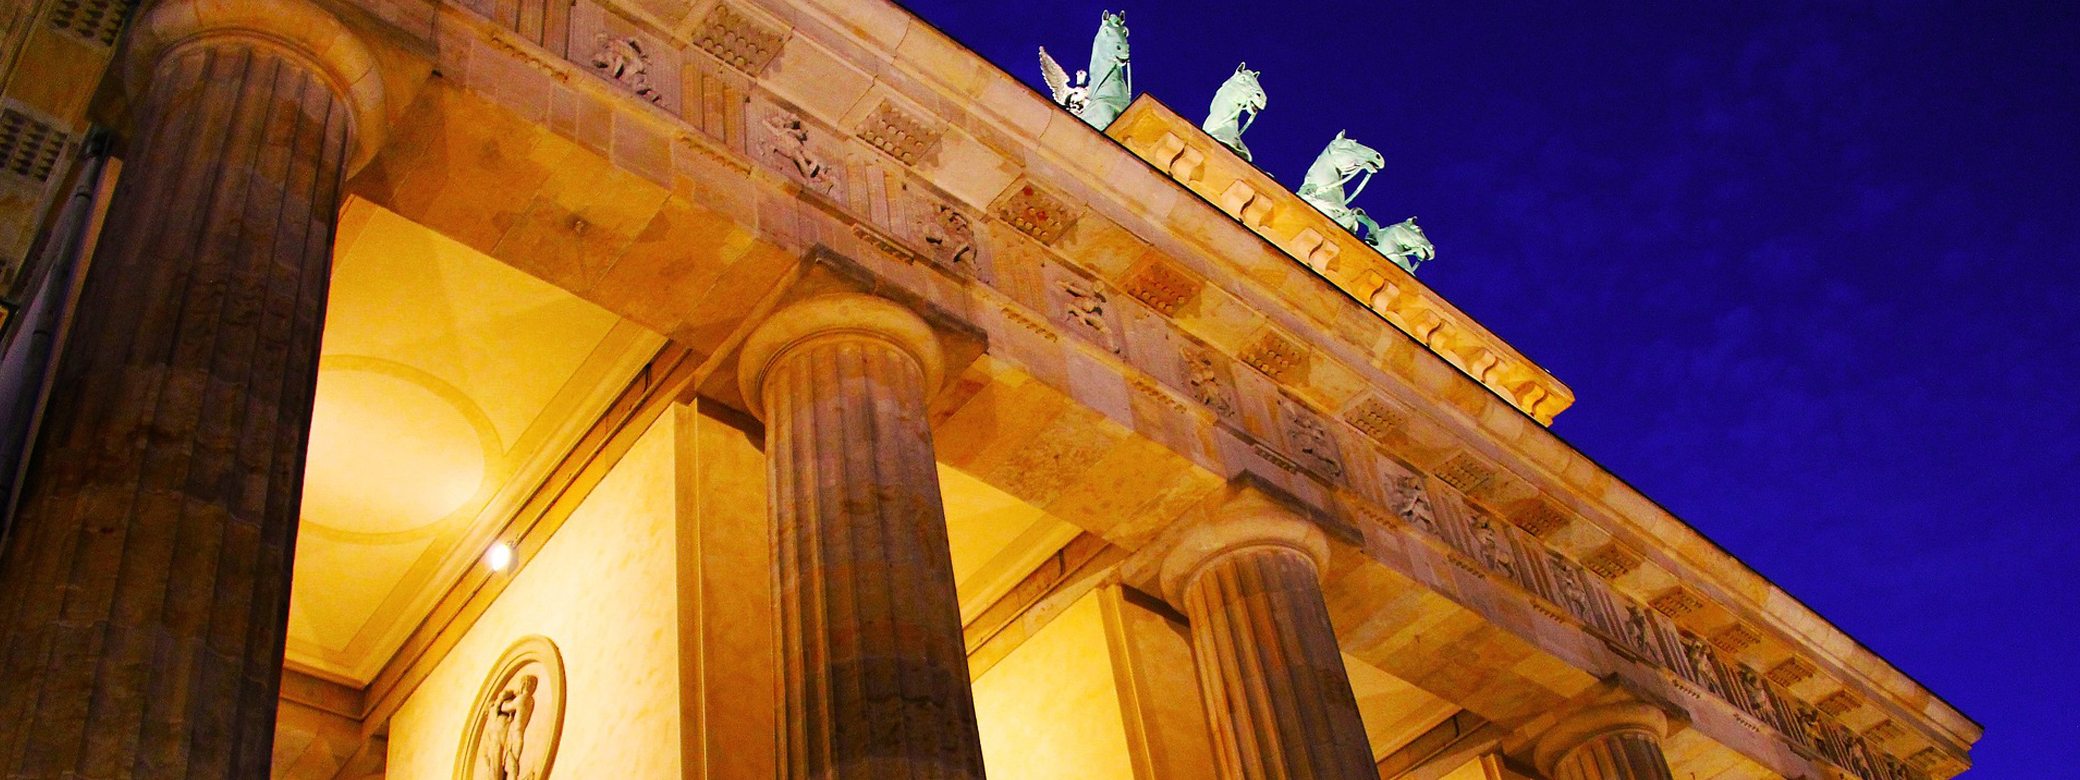 Brandenburg Gate in Berlin, lit up at night